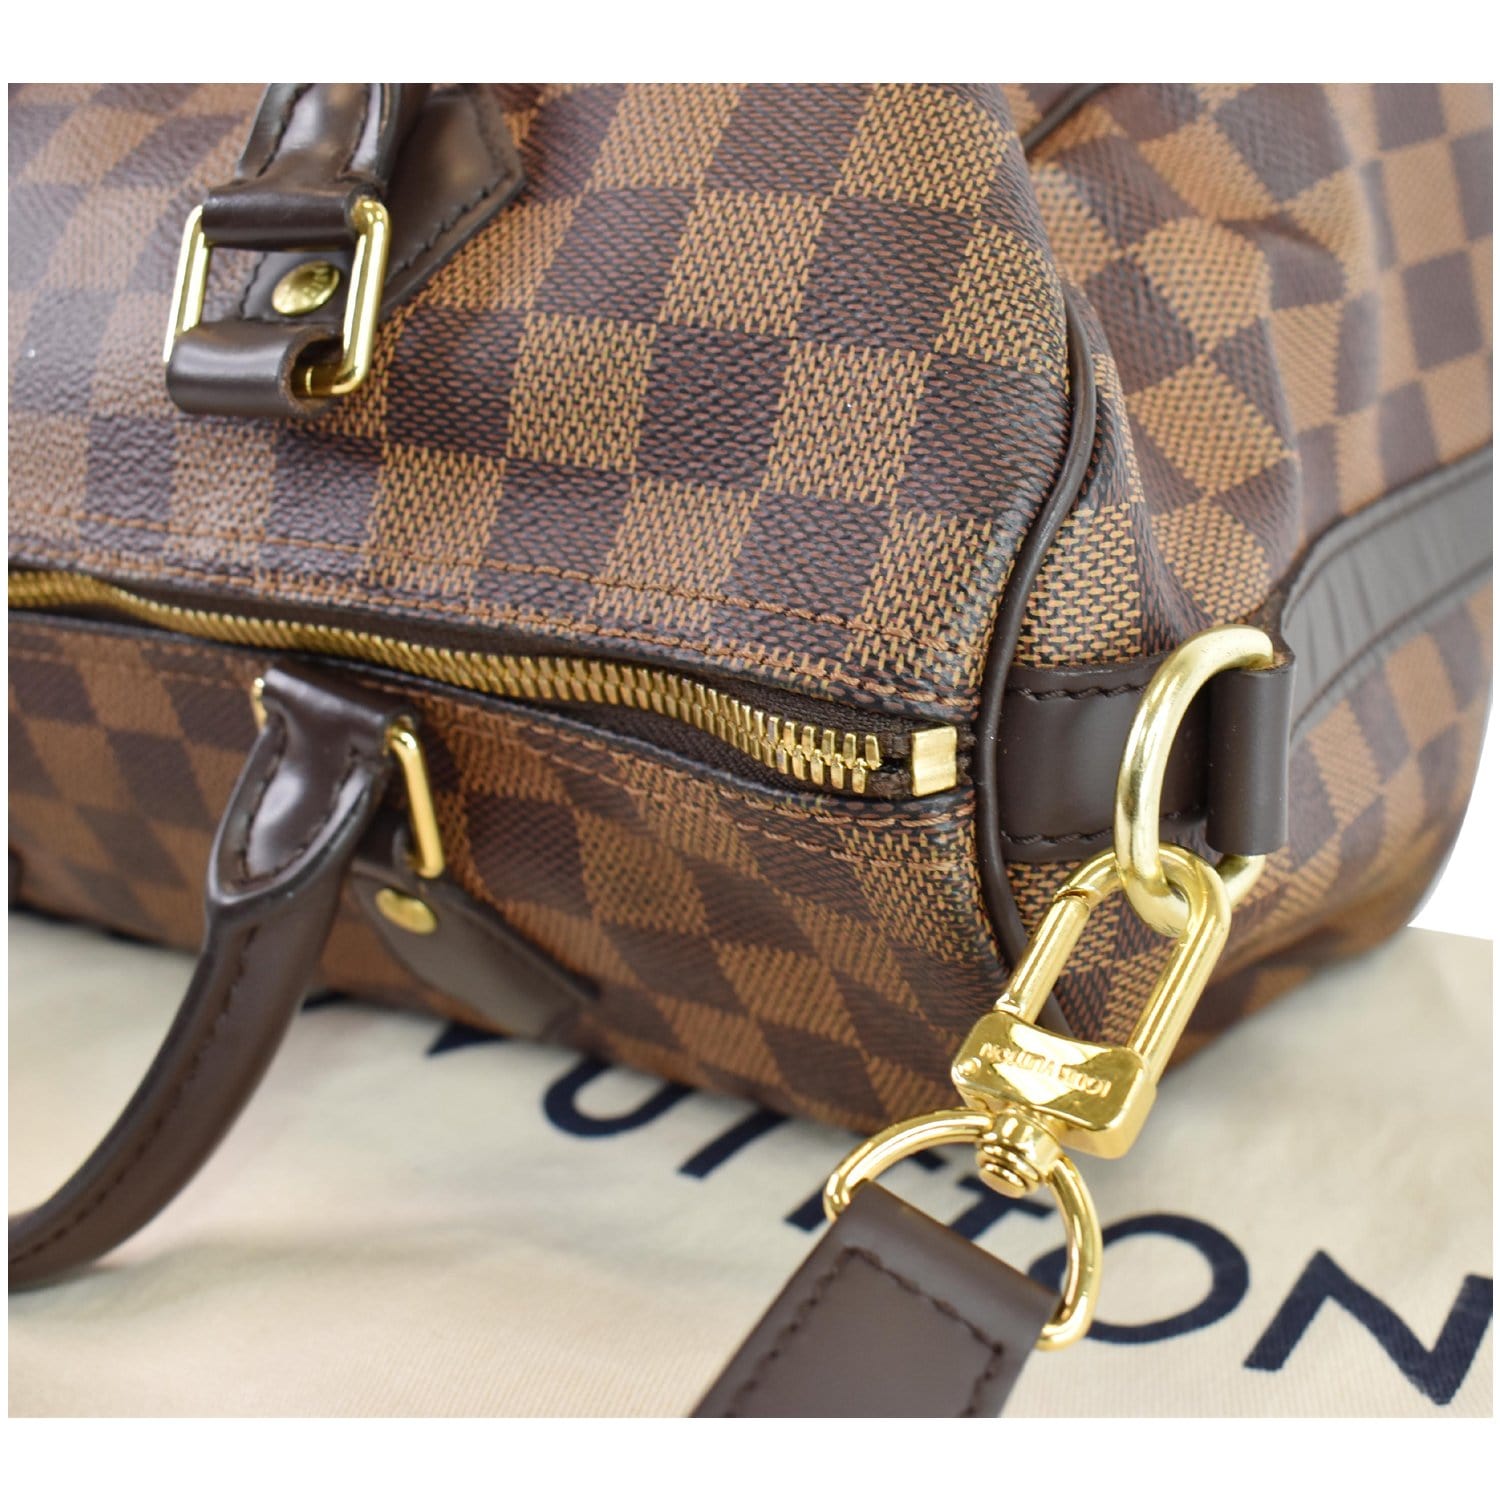 Louis Vuitton Speedy 30 Damier Ebene Shoulder Bag